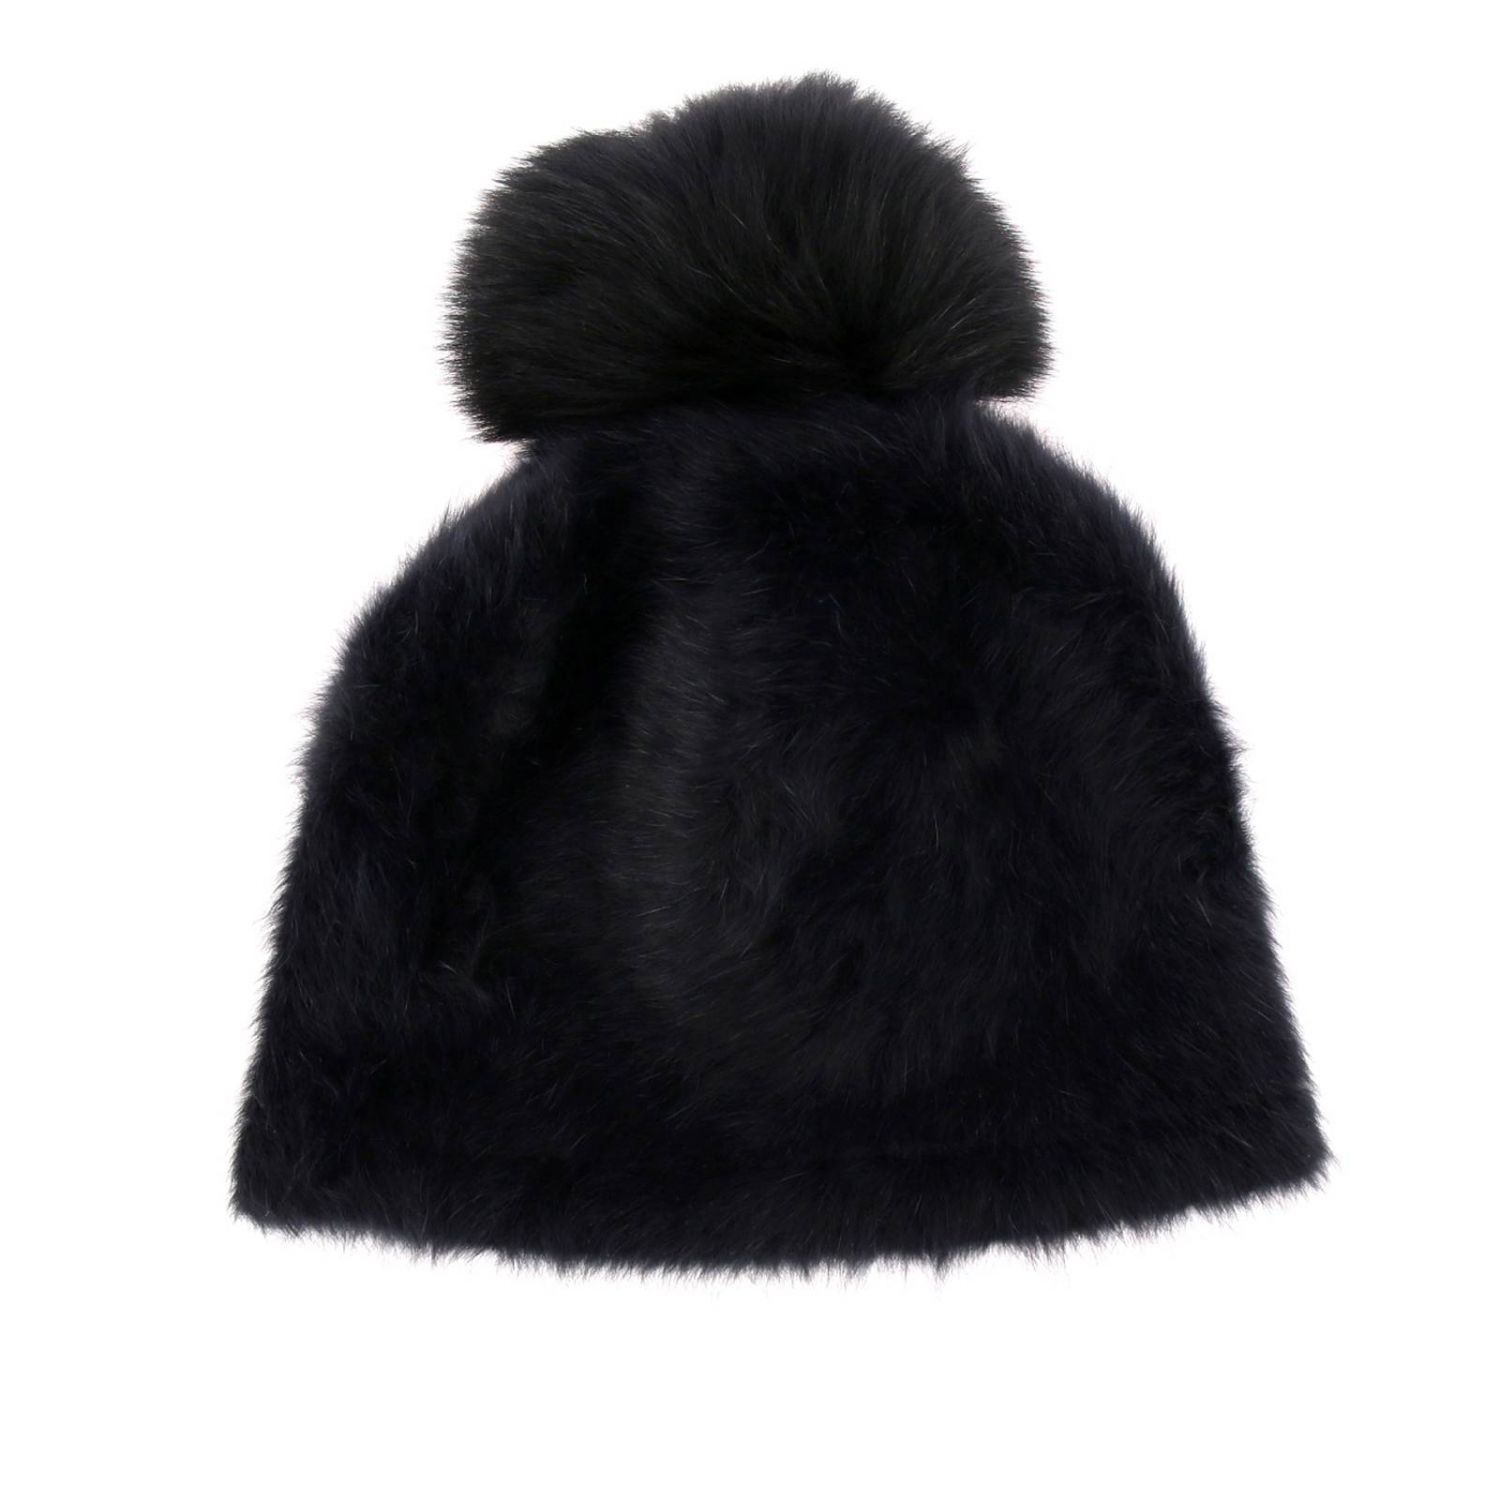 Max Mara Outlet: hat for women - Black | Max Mara hat 45760993 online ...